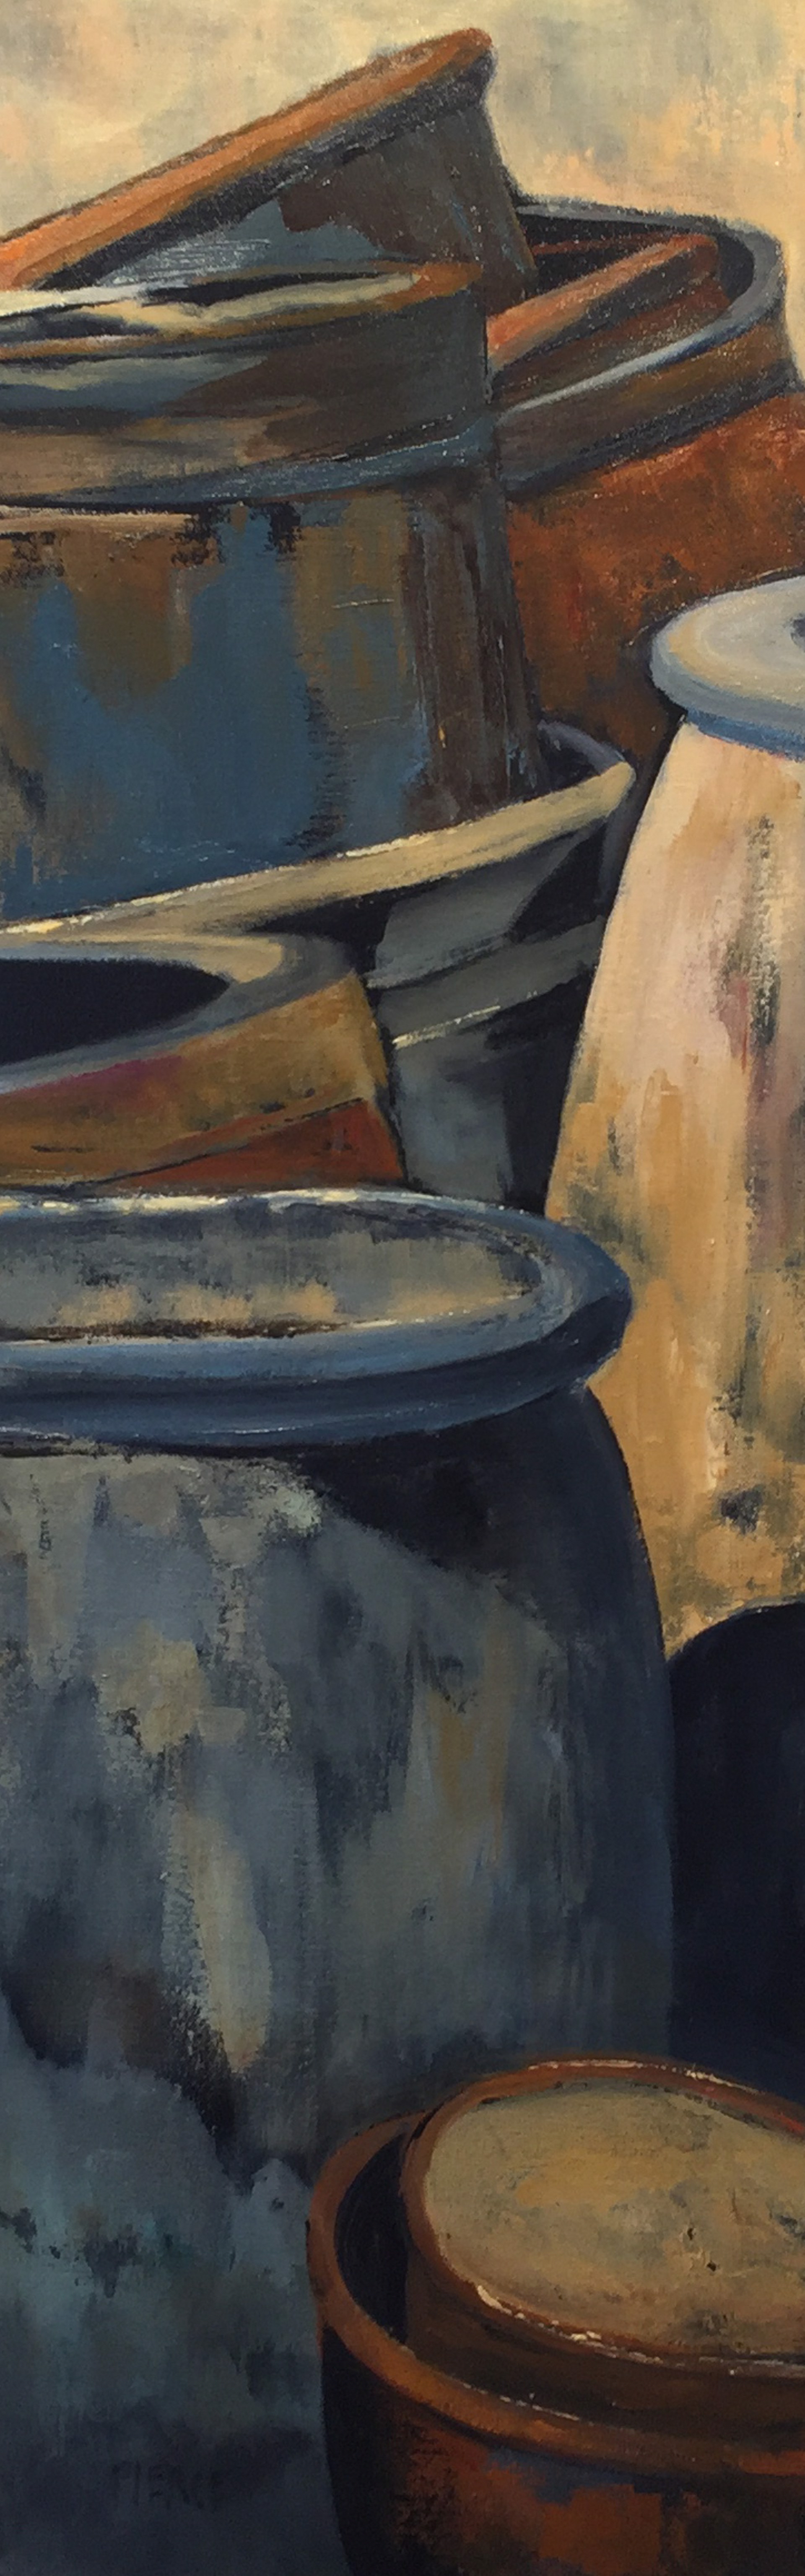 Clay Pot Series II by Carol Pierce